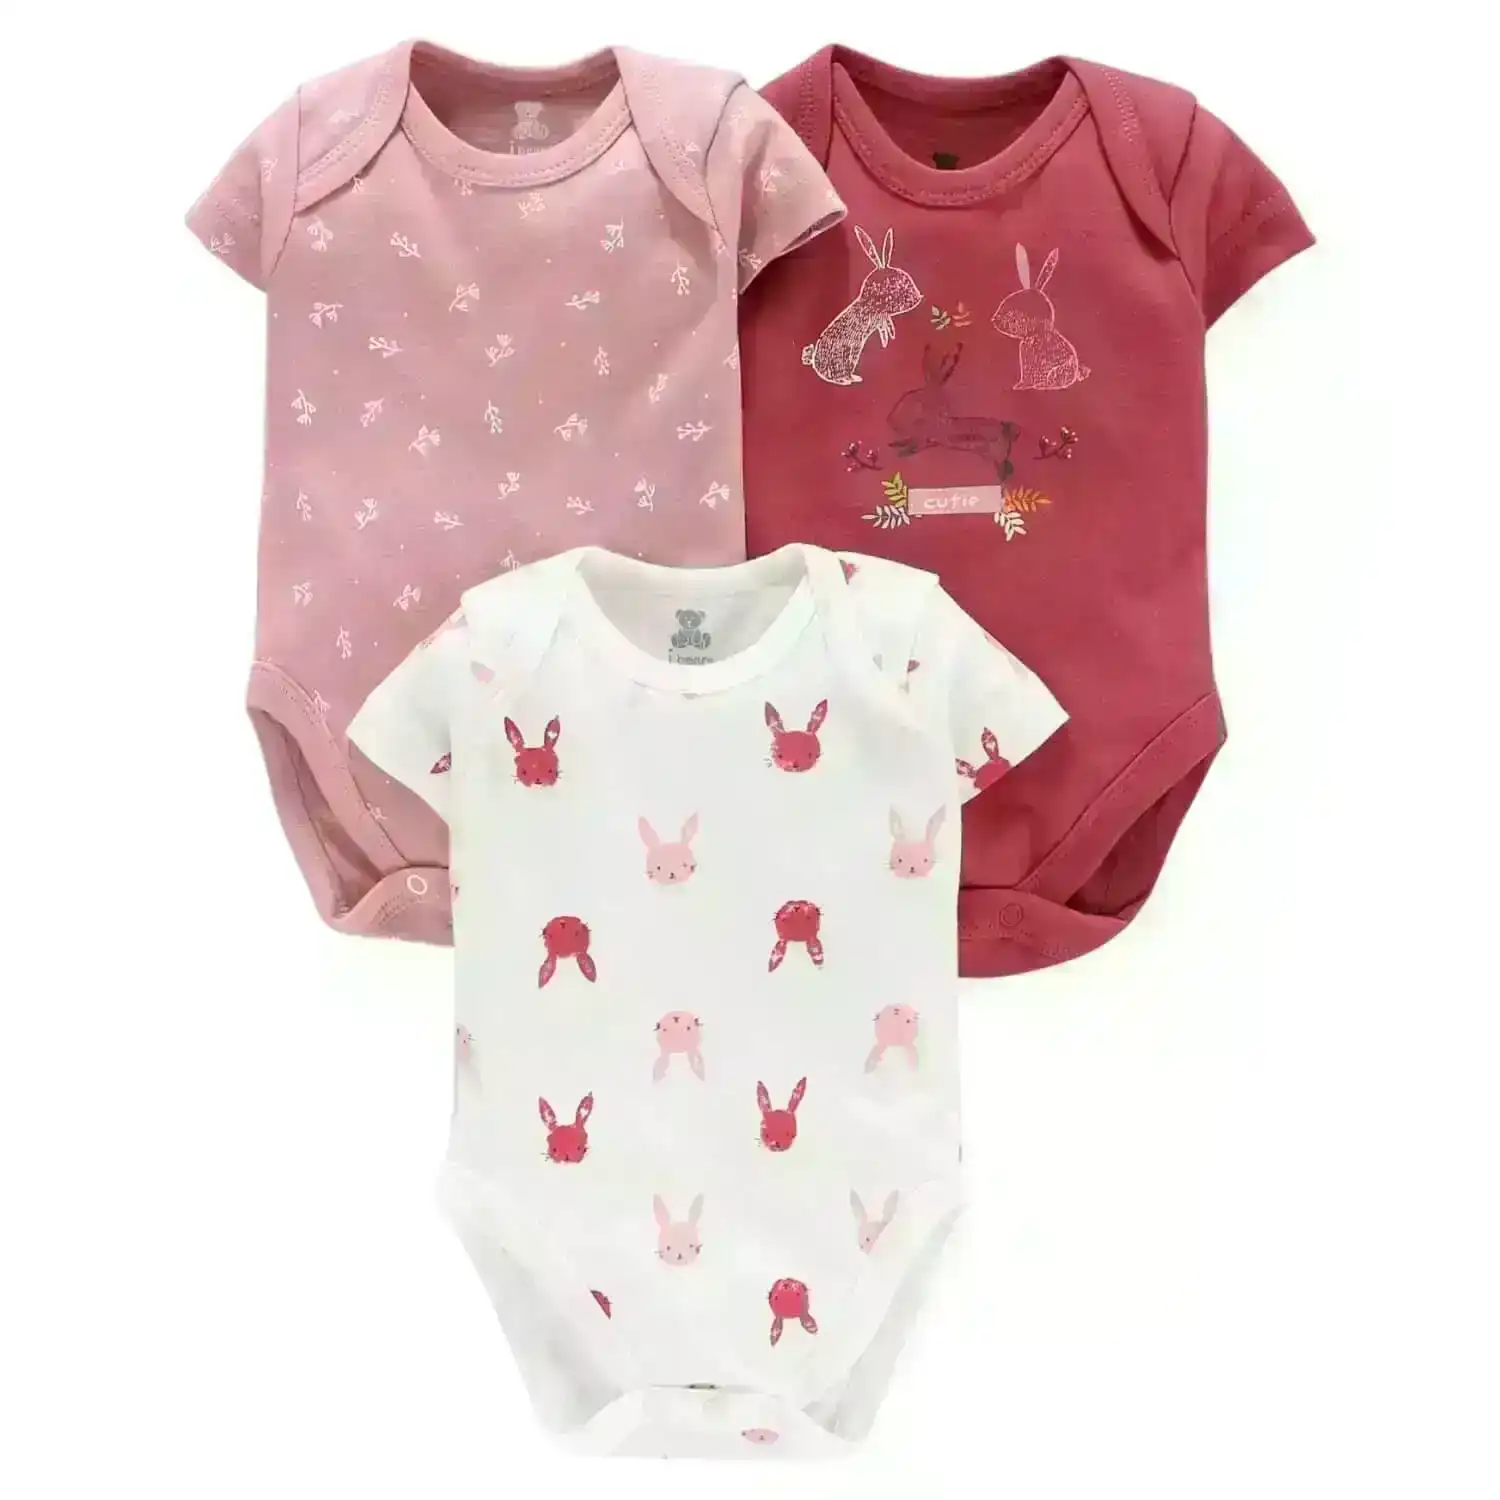 BabiesMart 3 Pack New Born Baby Clothes Half Sleeves Unisex Onesies